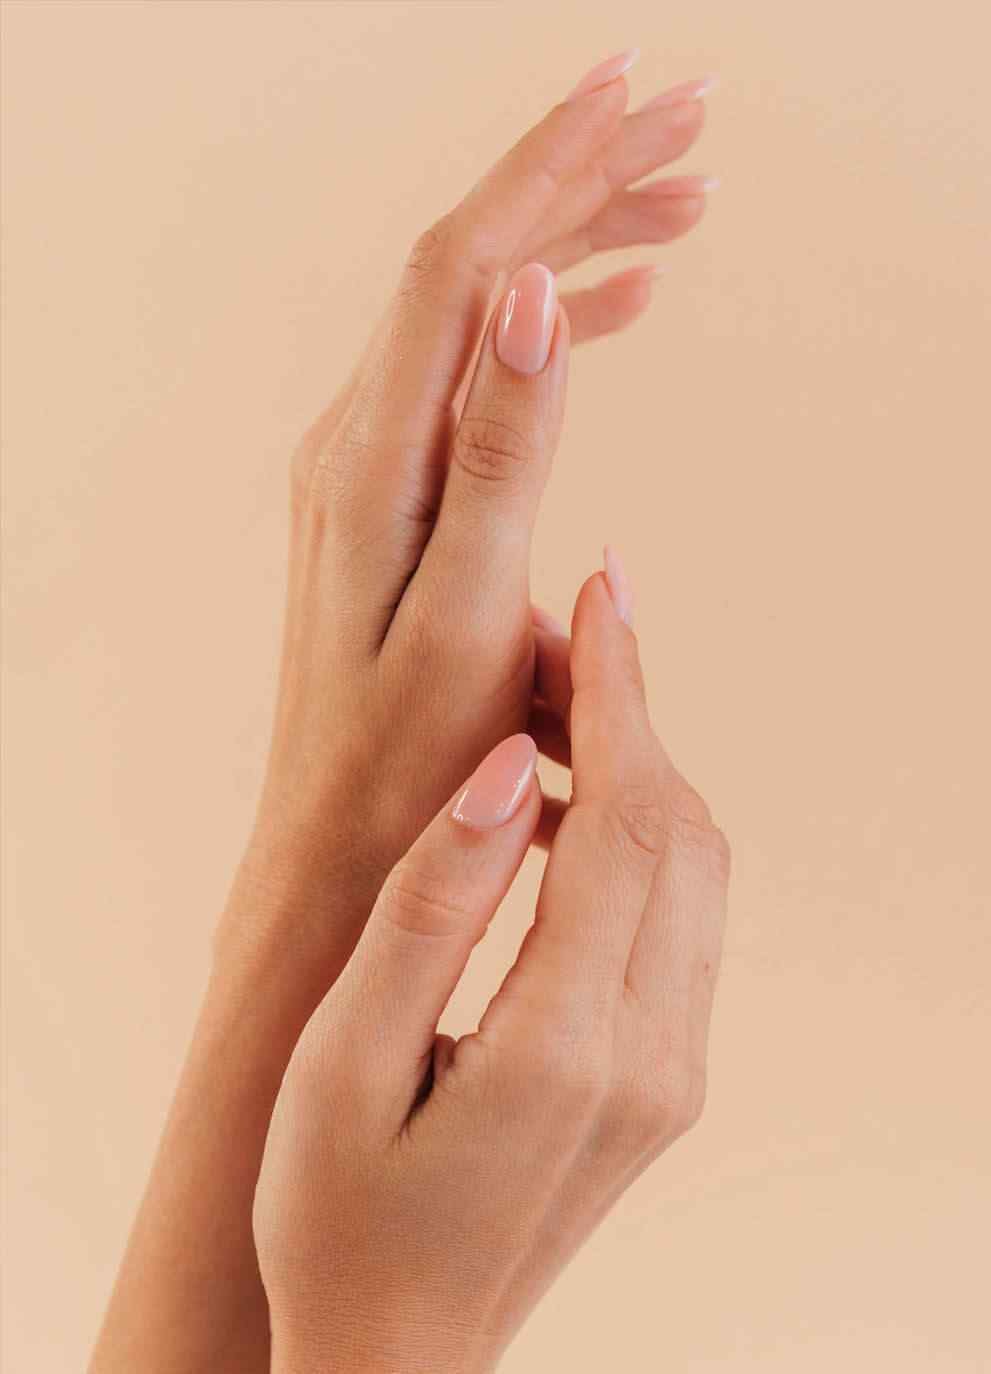 Manicure treatments